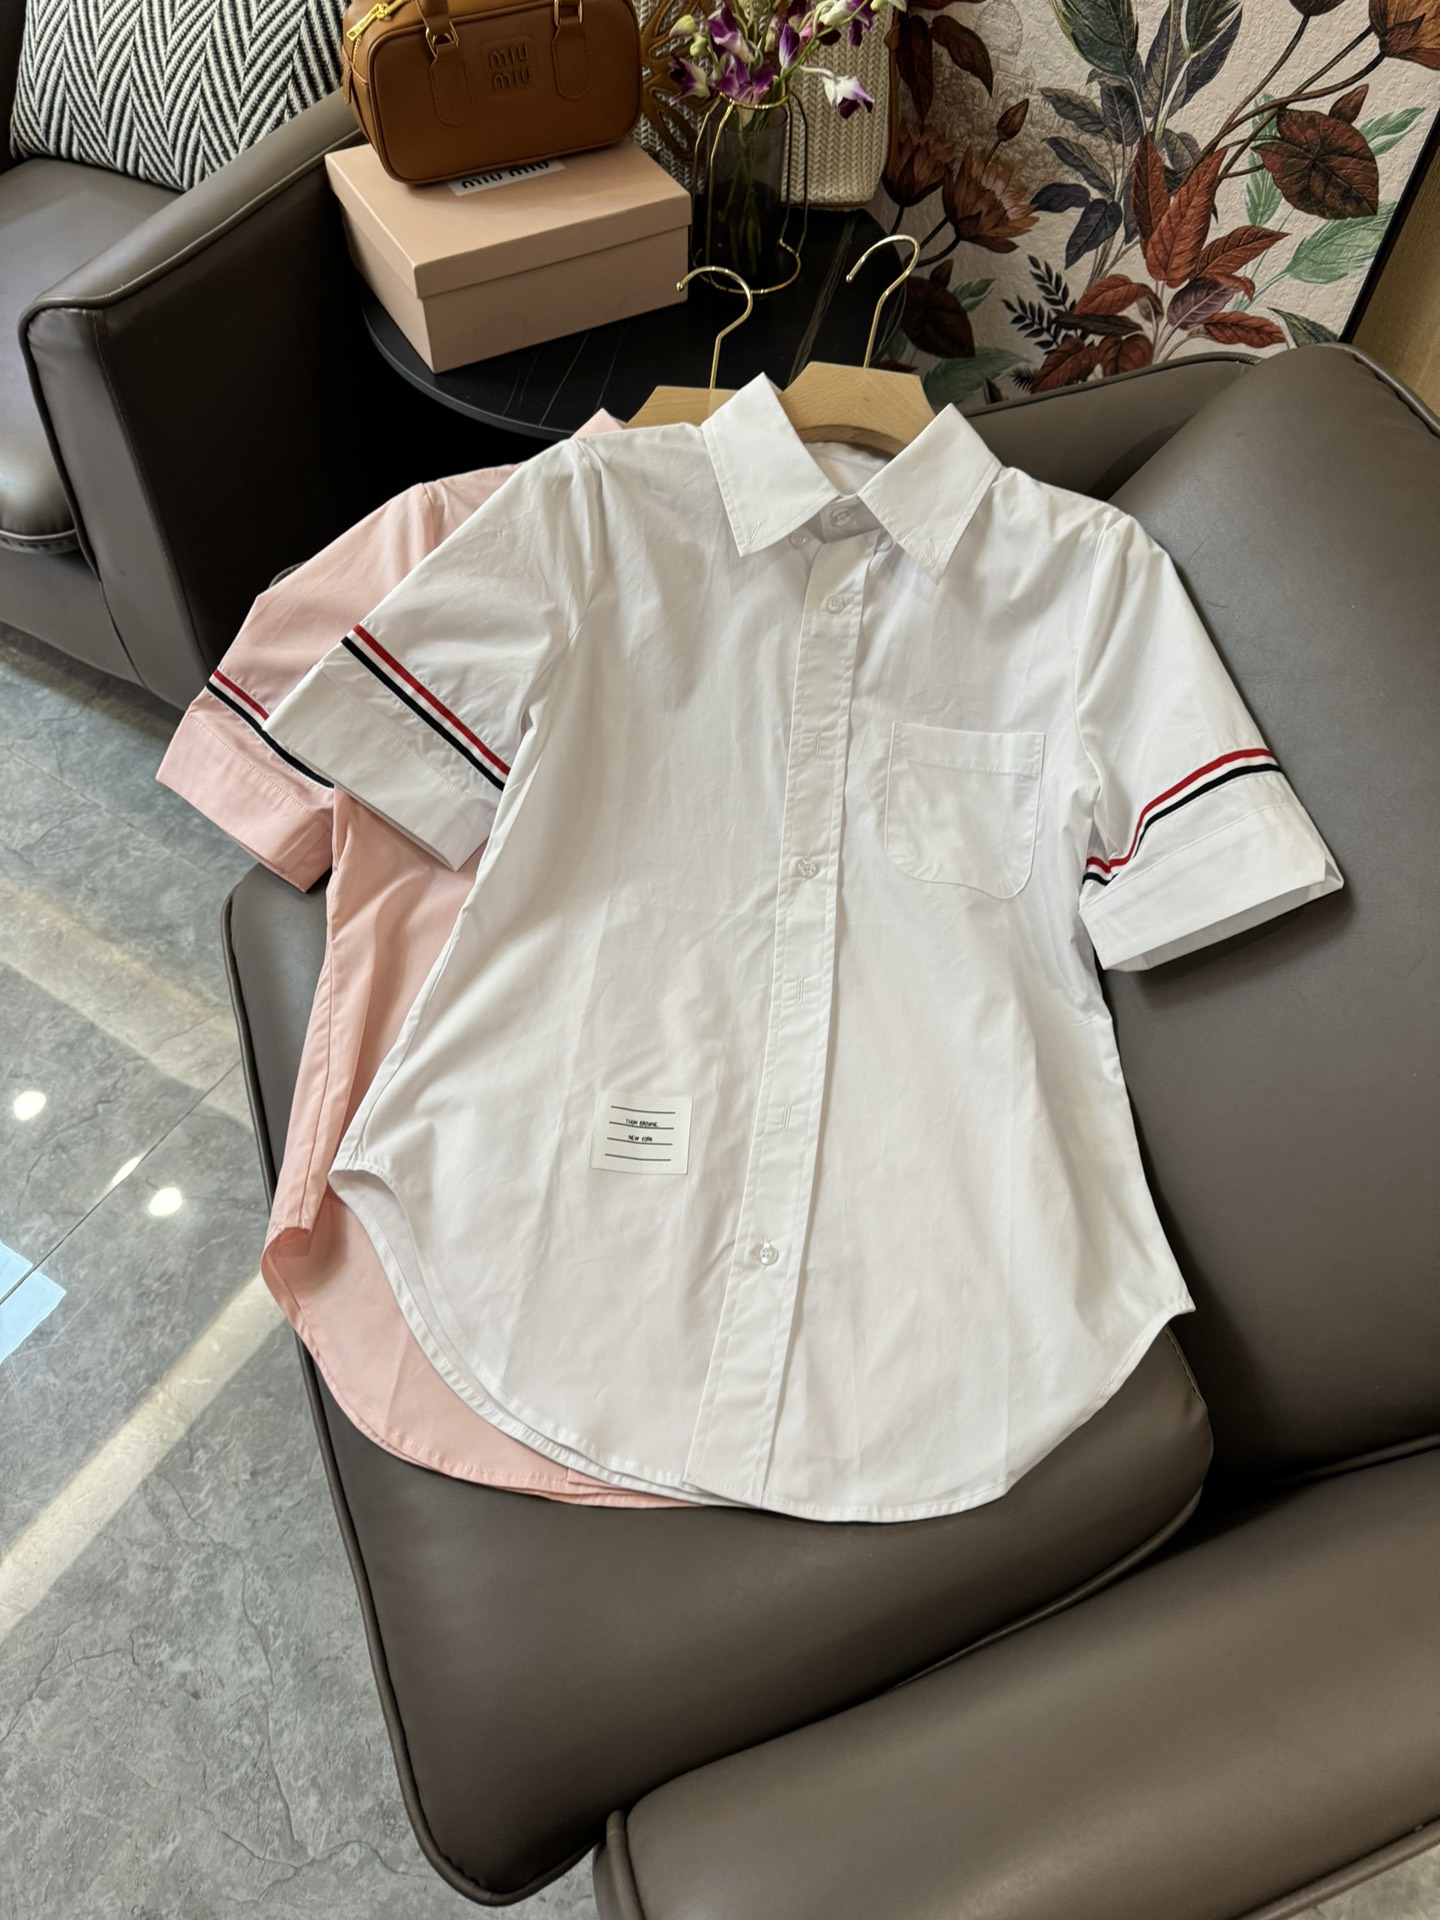 CS016#新款衬衫⚠️Pzddll????\nTB 条纹短袖修身衬衫 粉色 白色 SML